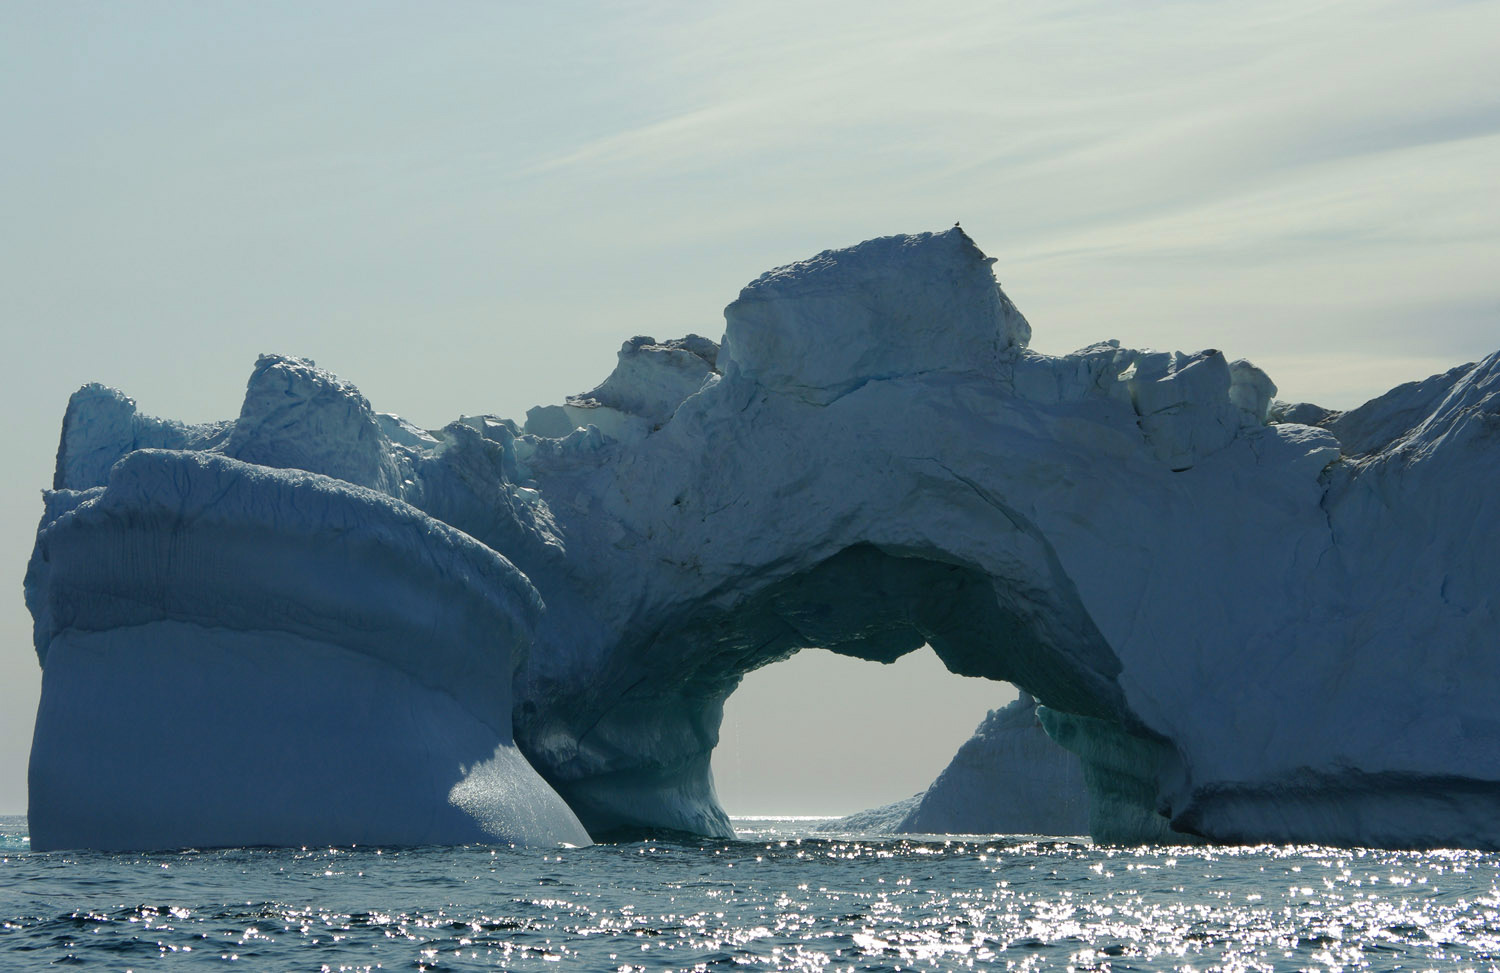 Iceberg 7 - East Greenland, greenland, travel